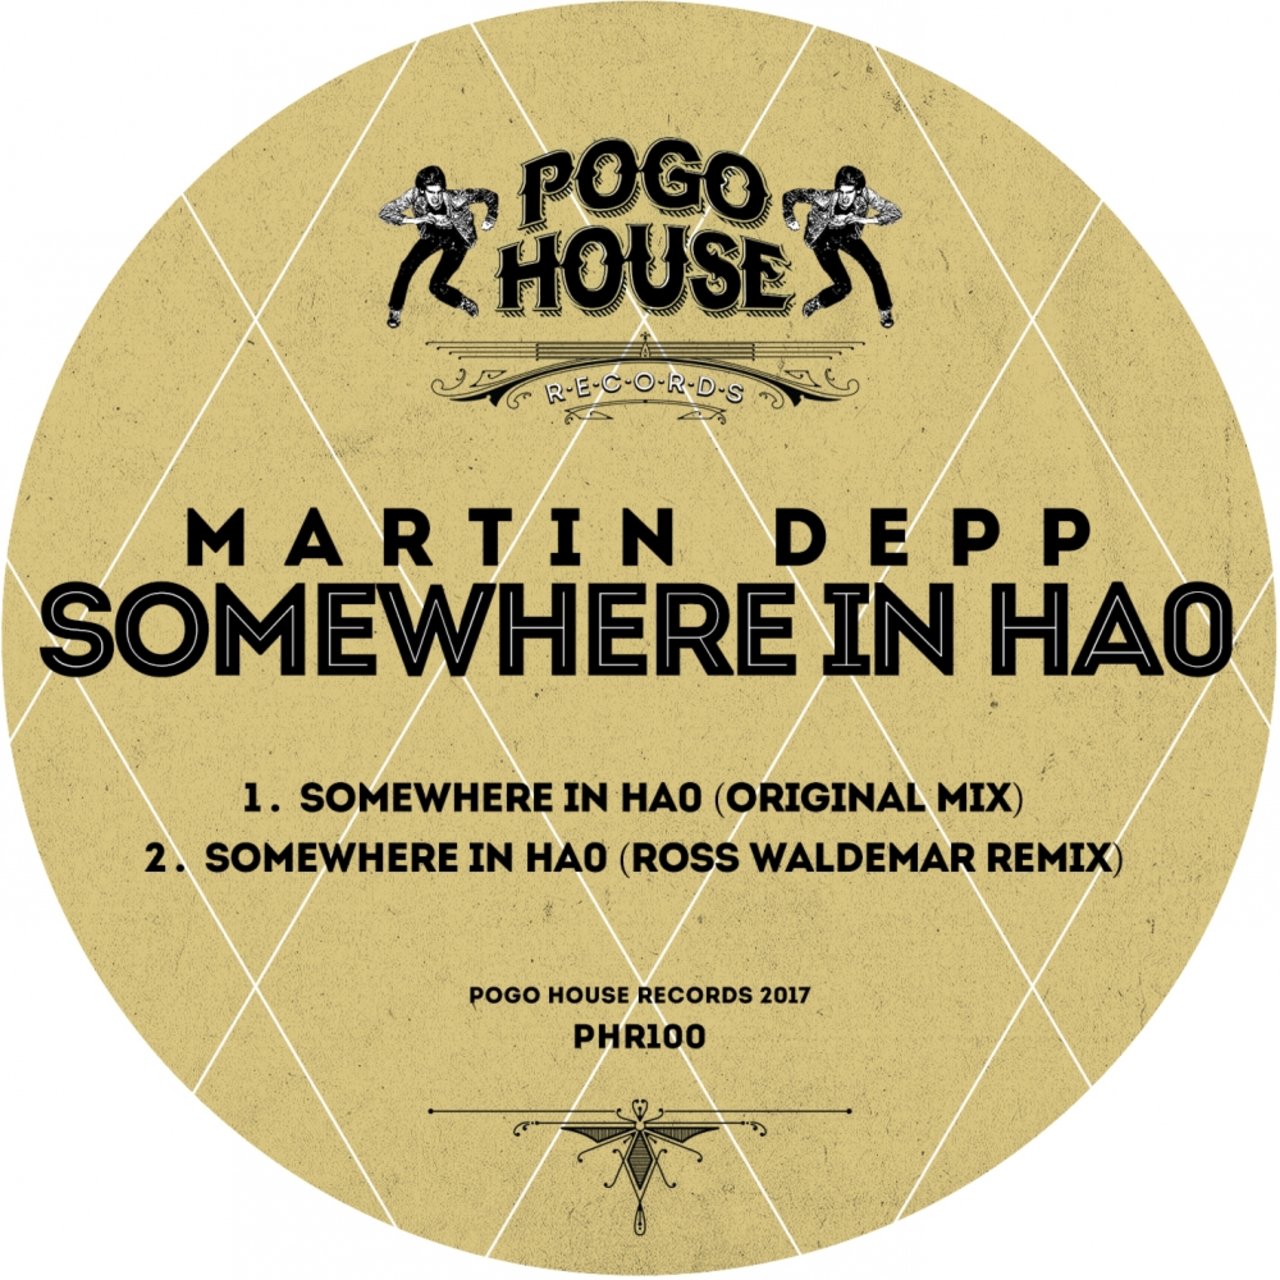 Martin Depp - Somewhere In HA0 / Pogo House Records